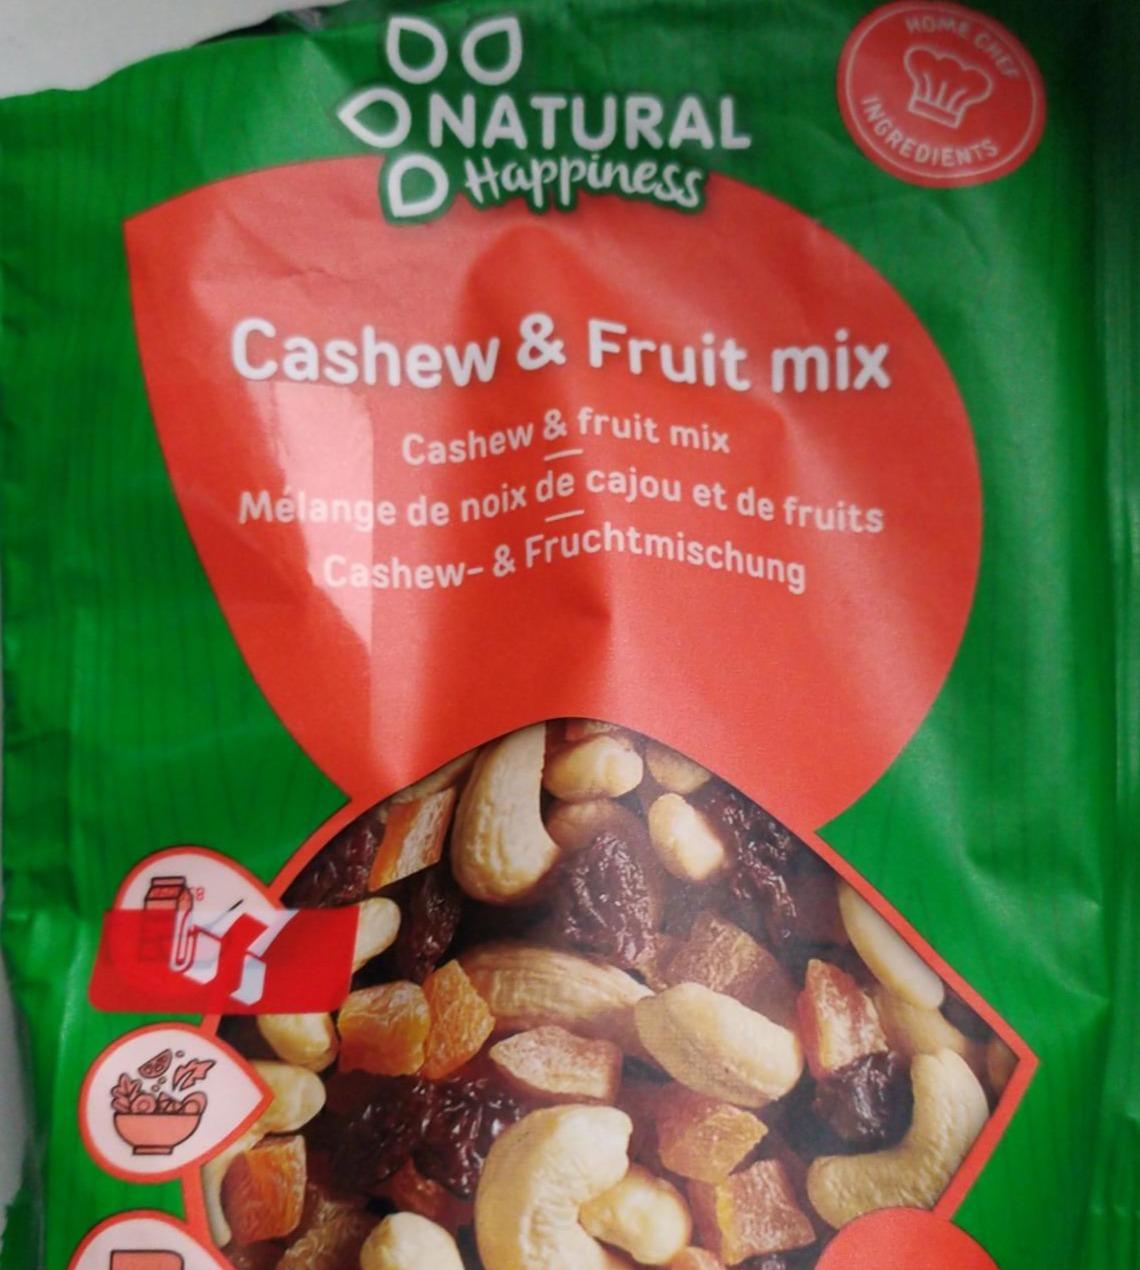 Zdjęcia - Cashew & fruit mix Natural happiness